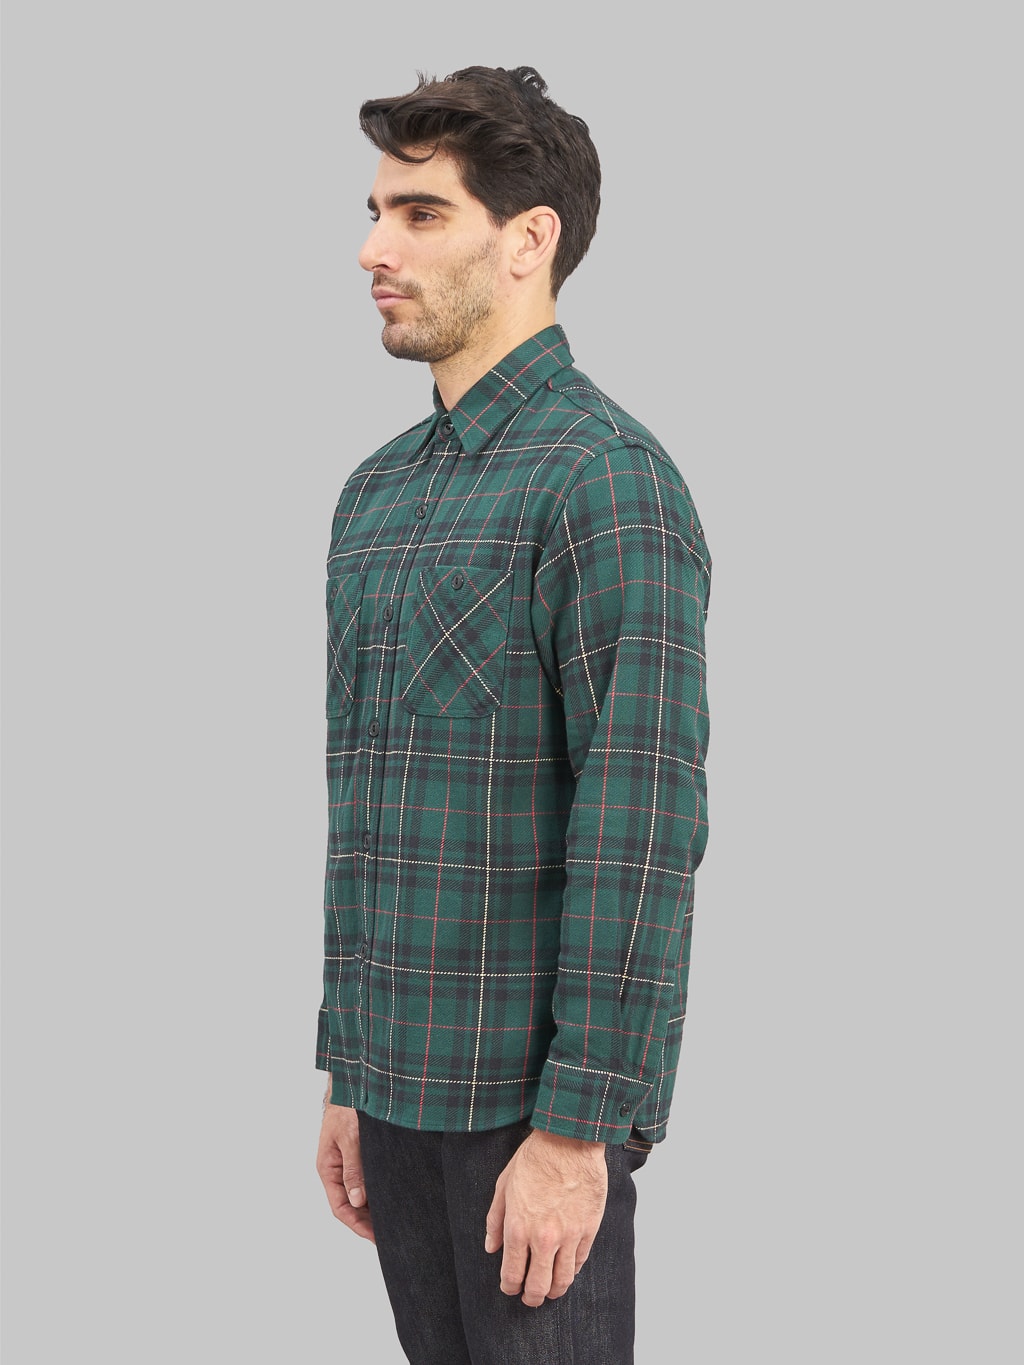 Sugar Cane Twill Check Flannel Shirt green side fit